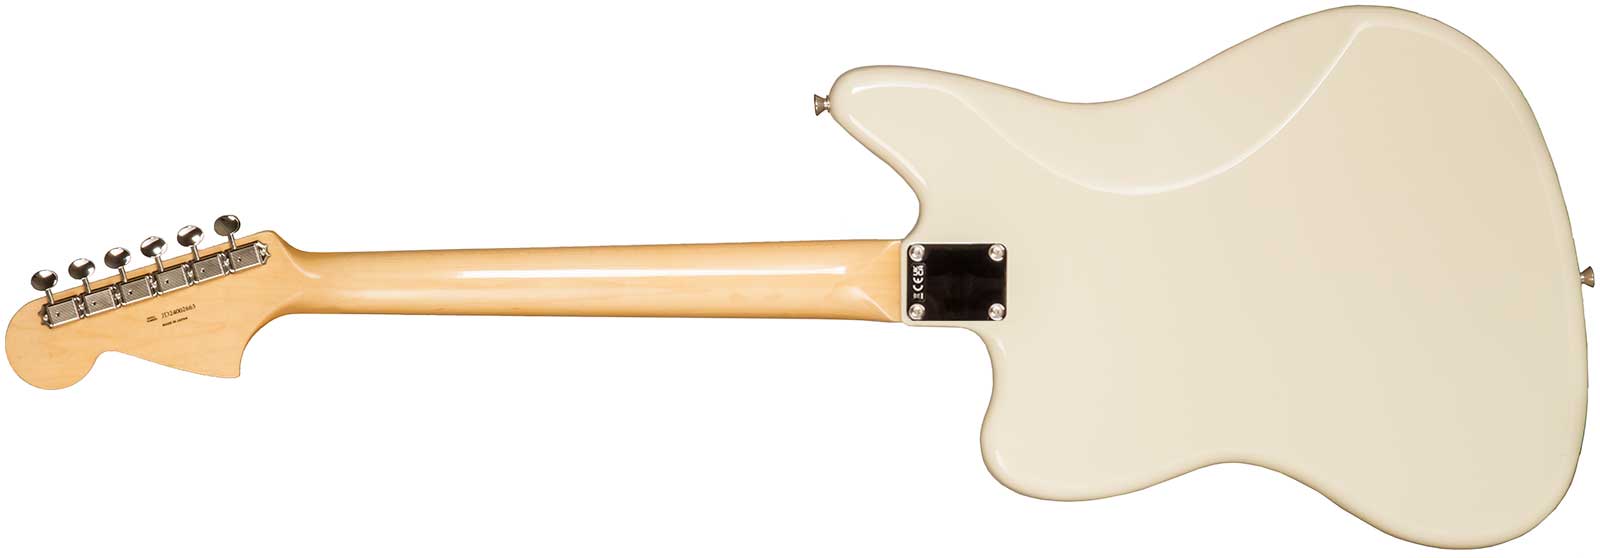 Fender Jaguar Traditional Ii 60s Japan 2s Trem Rw - Olympic White - Retro rock electric guitar - Variation 4